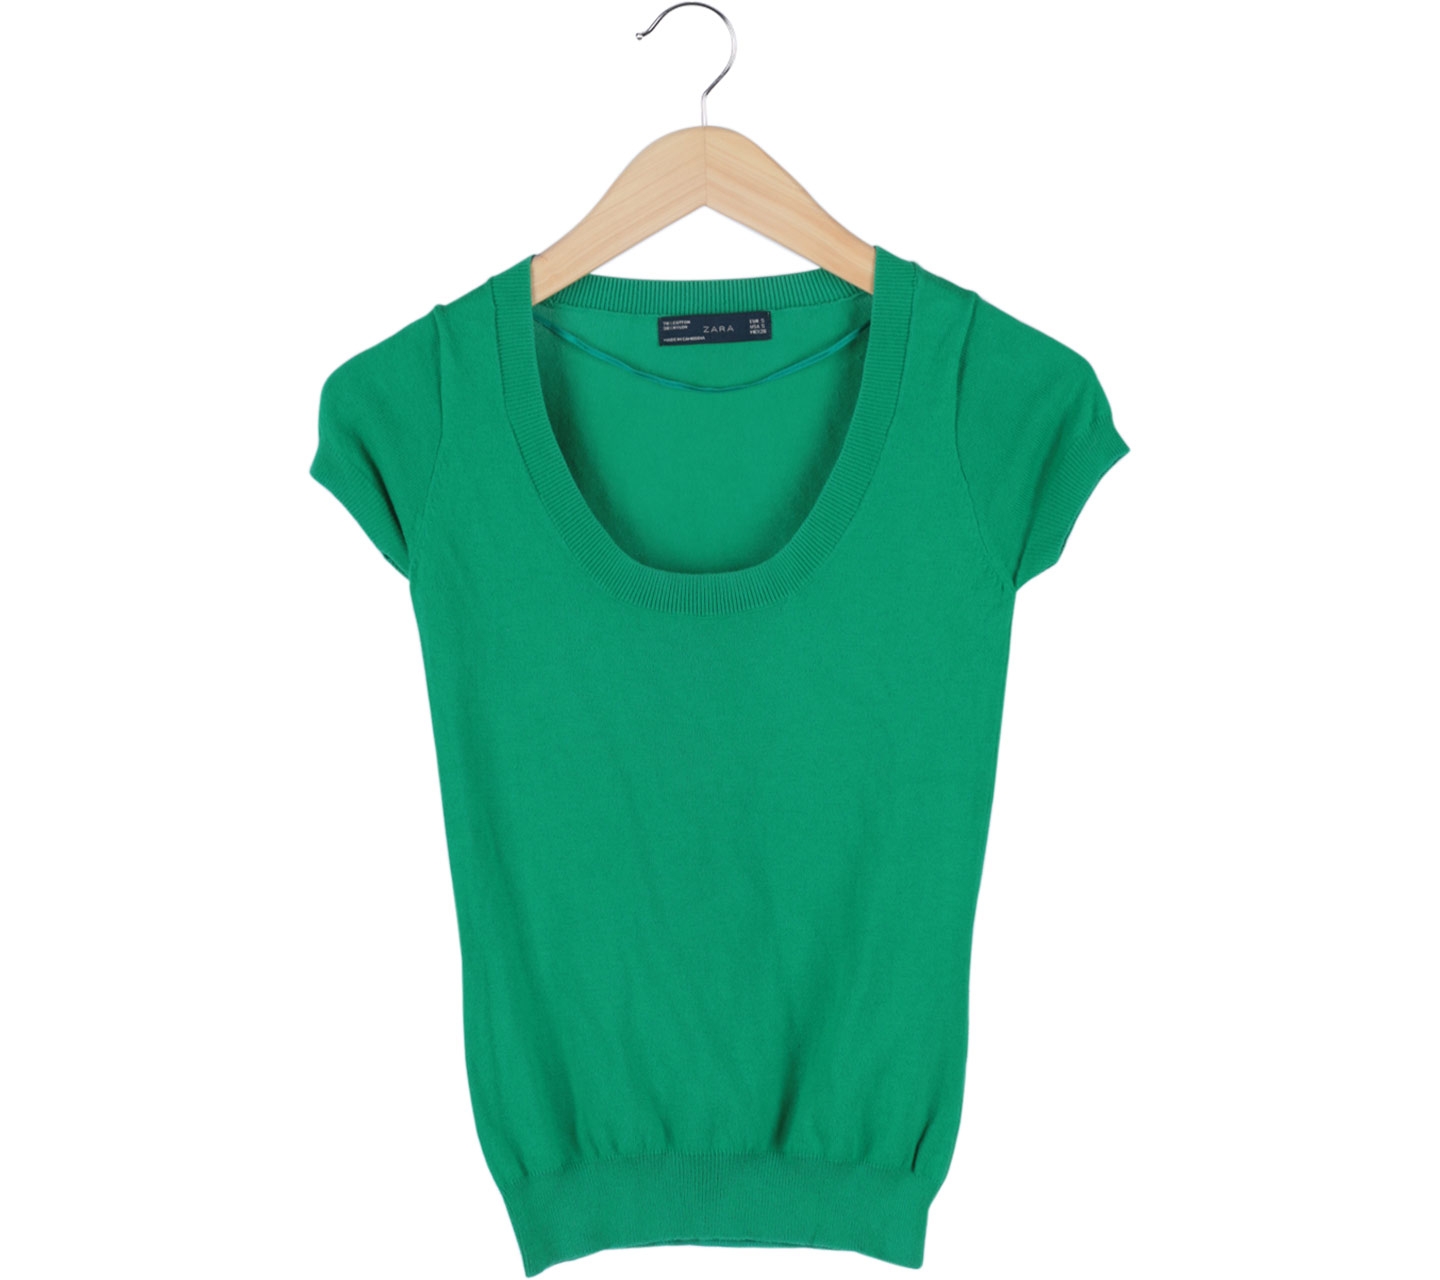 Zara Green Knitted Blouse